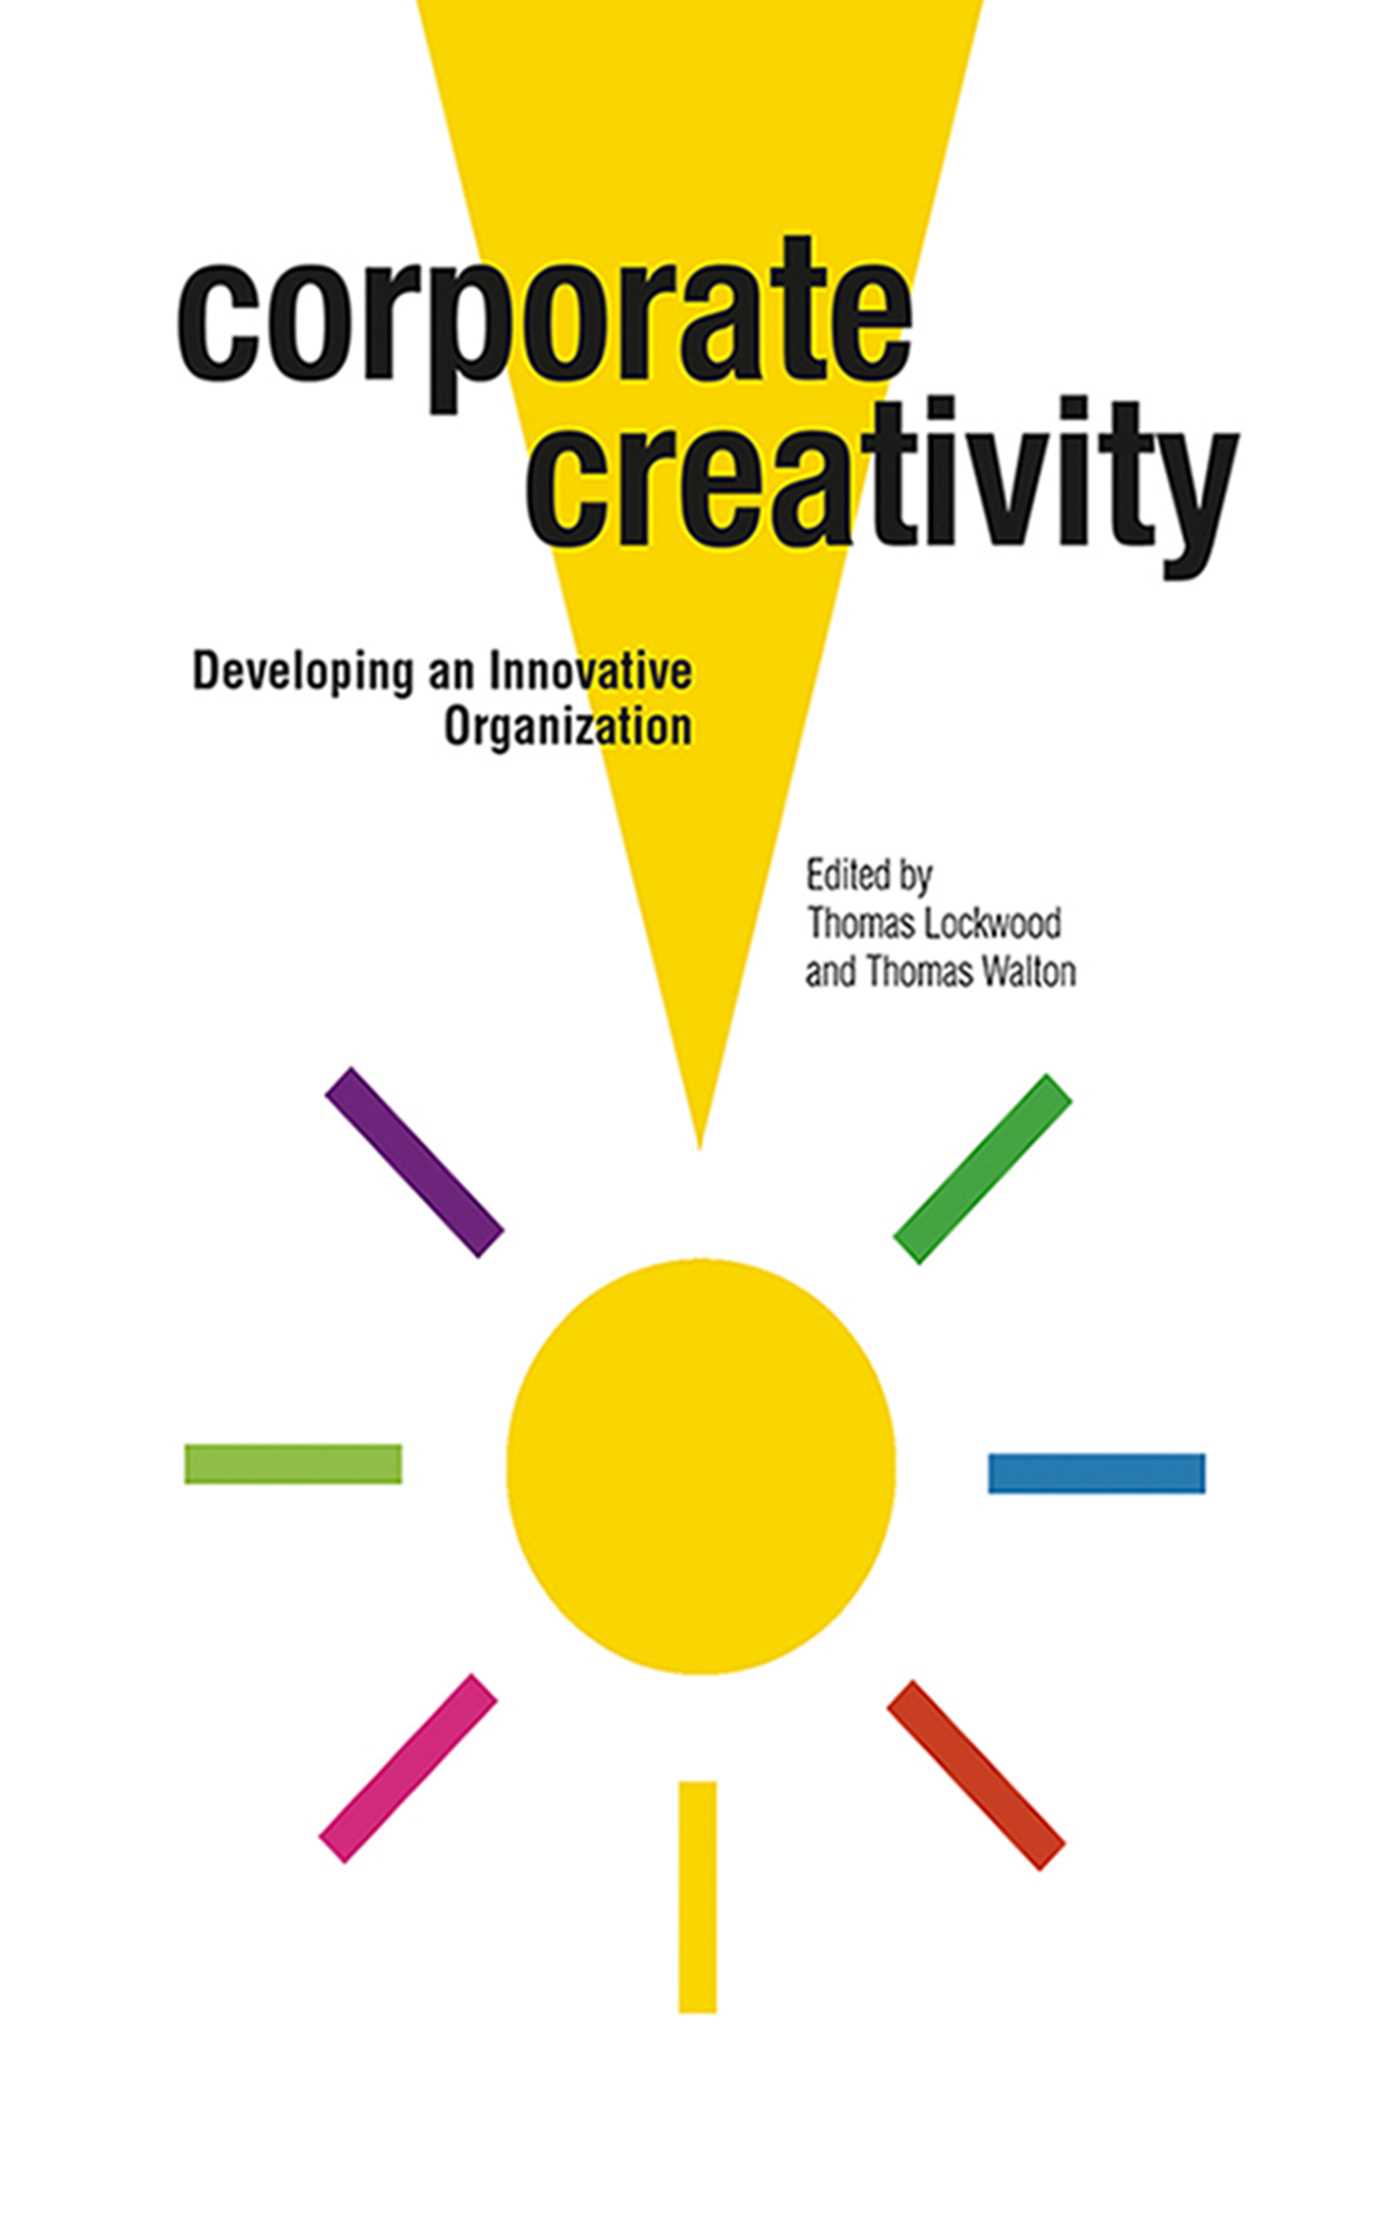 Corporate Creativity: Unleashing the Creative Power in Organizations